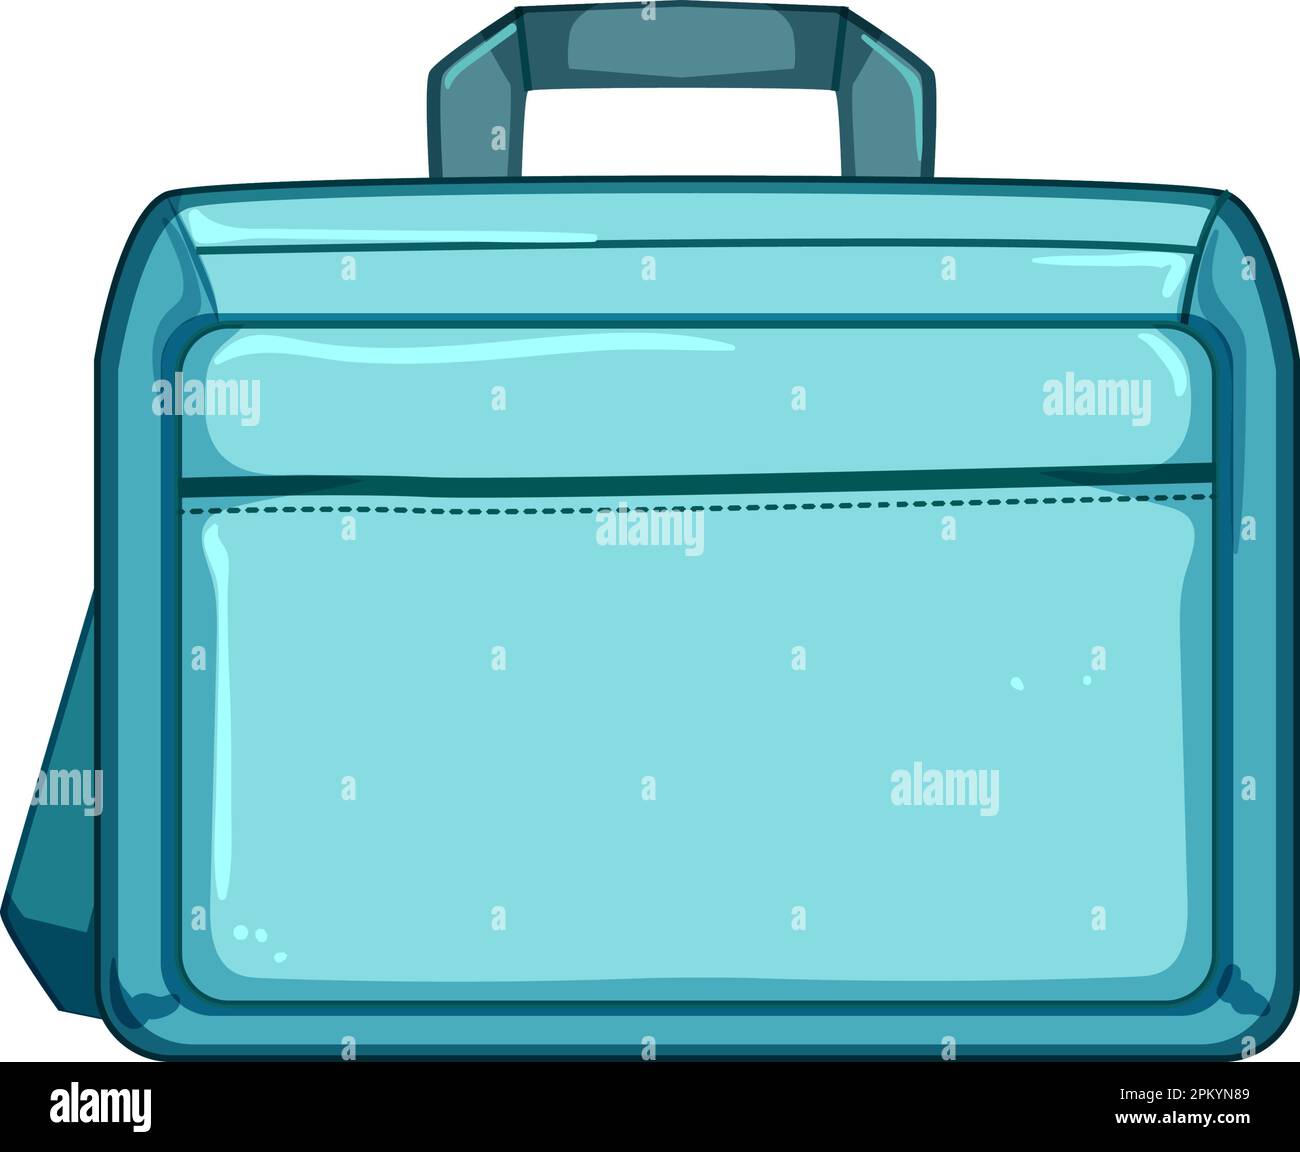 business laptop bag cartoon vector illustration Stock Vector Image ...